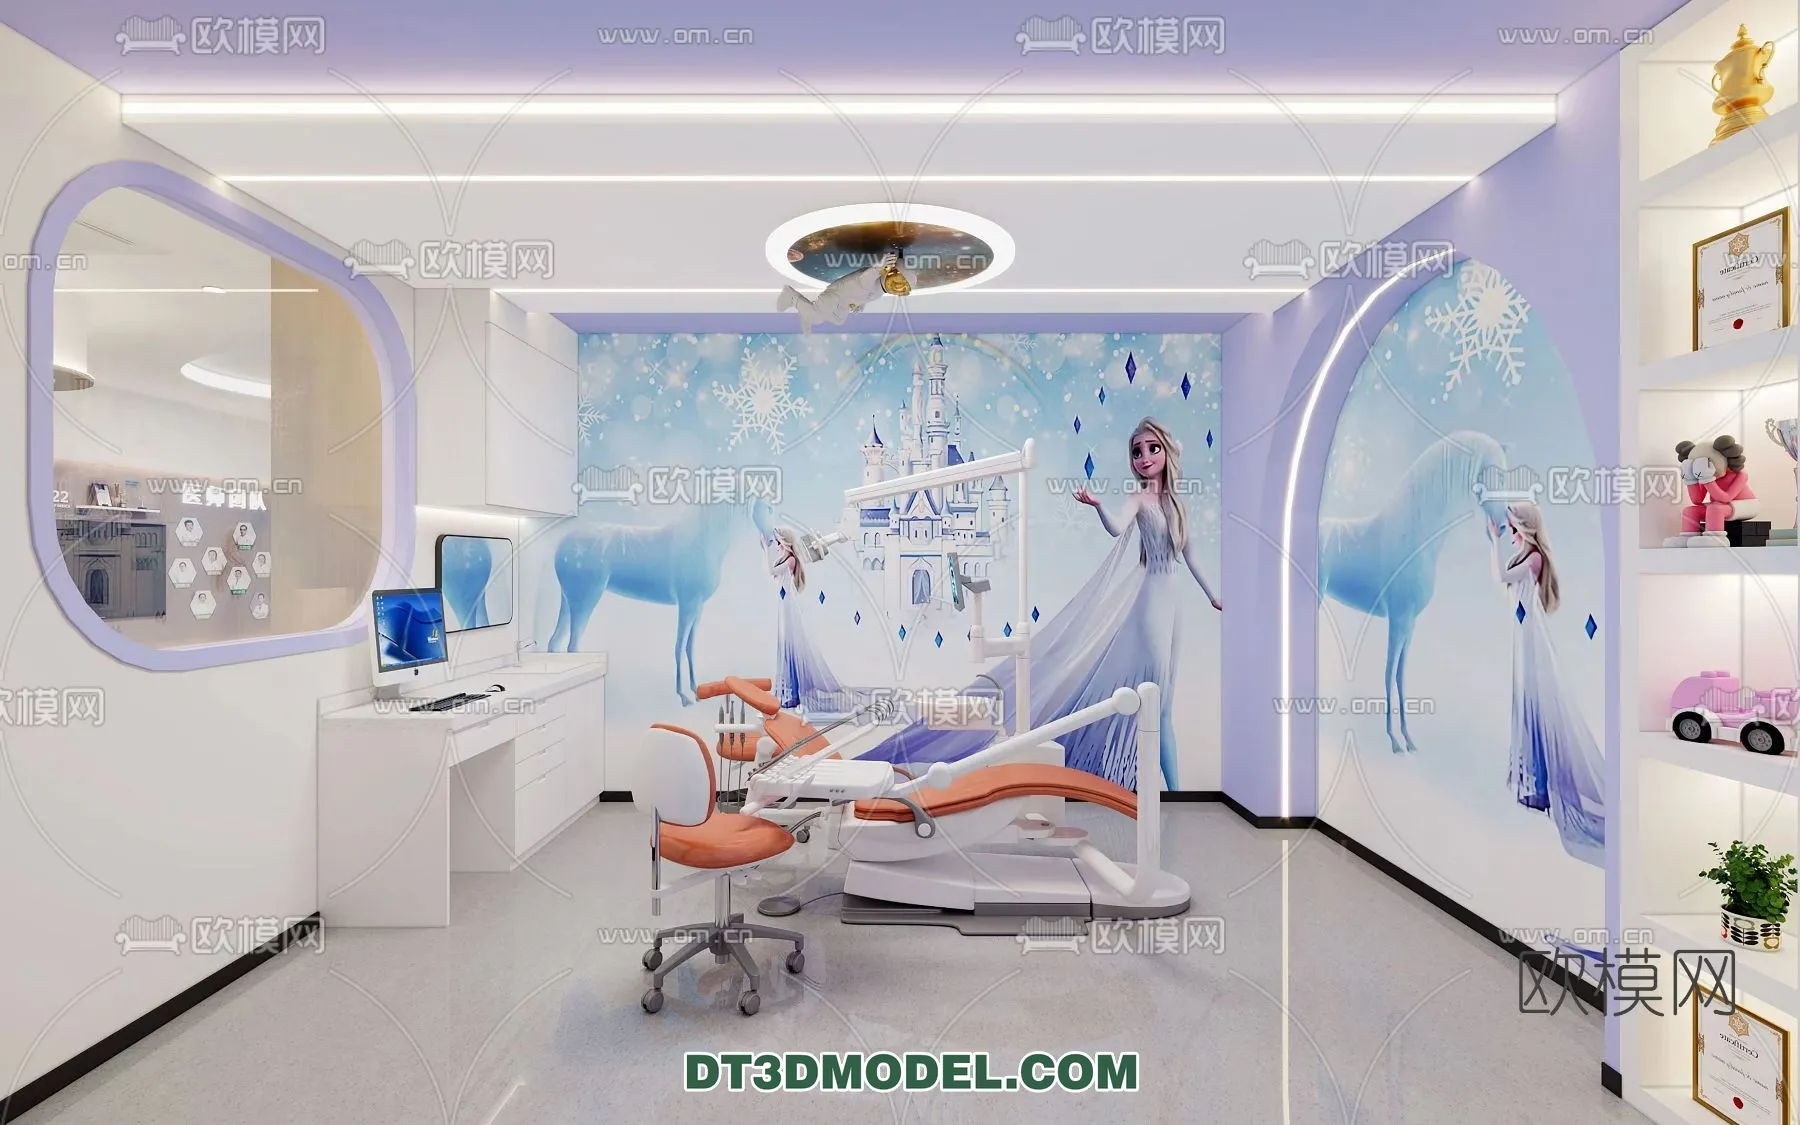 HOSPITAL 3D SCENES – MODERN – 0020